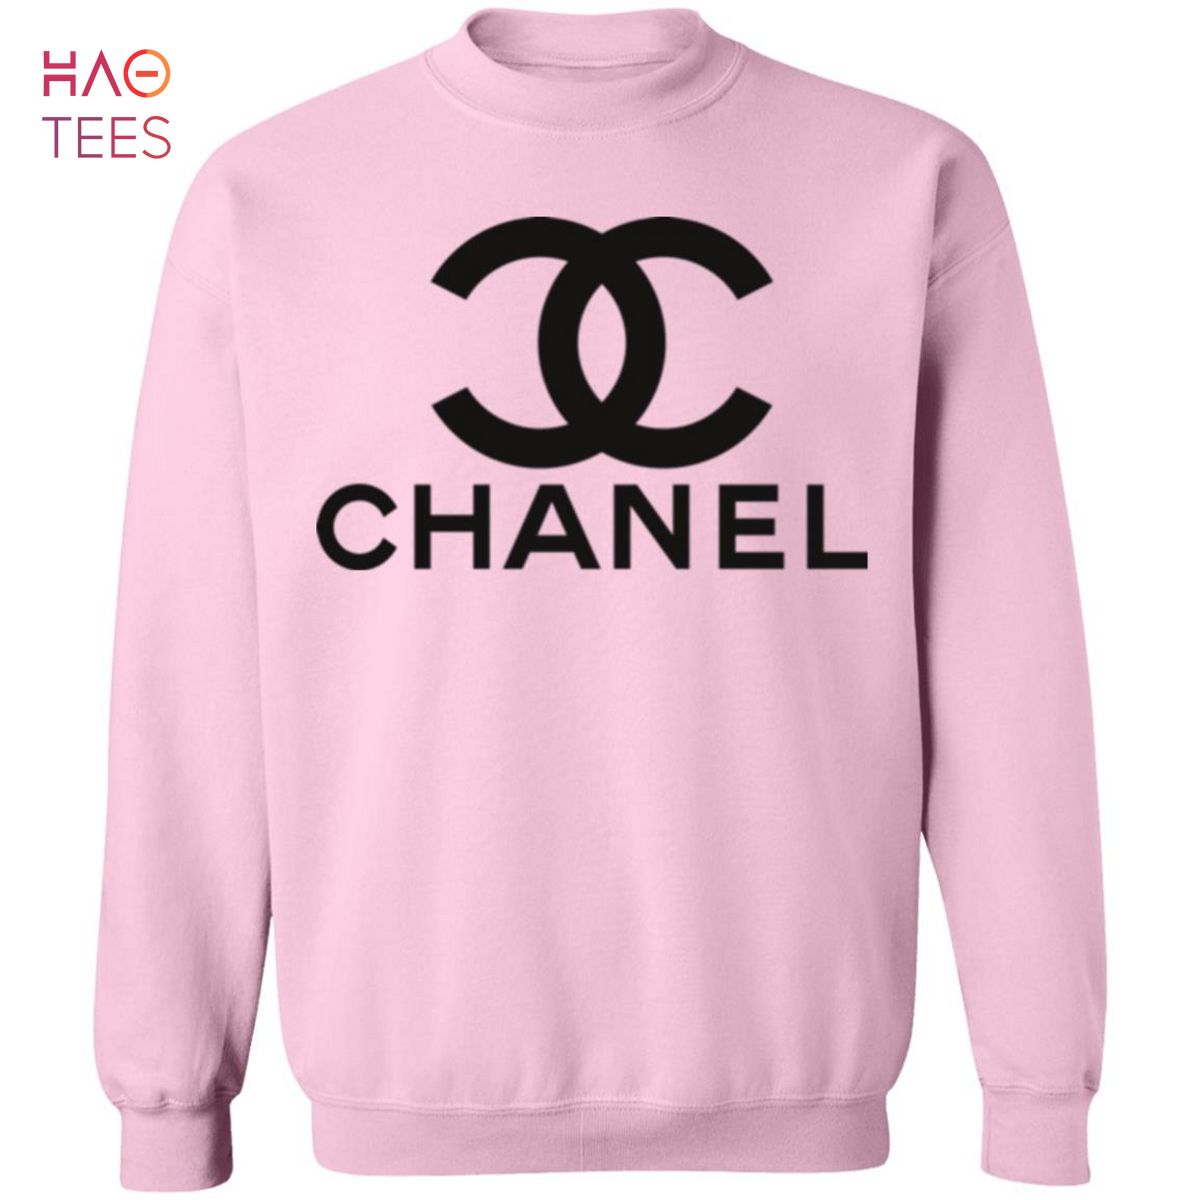 HOT Chanel Sweater Light